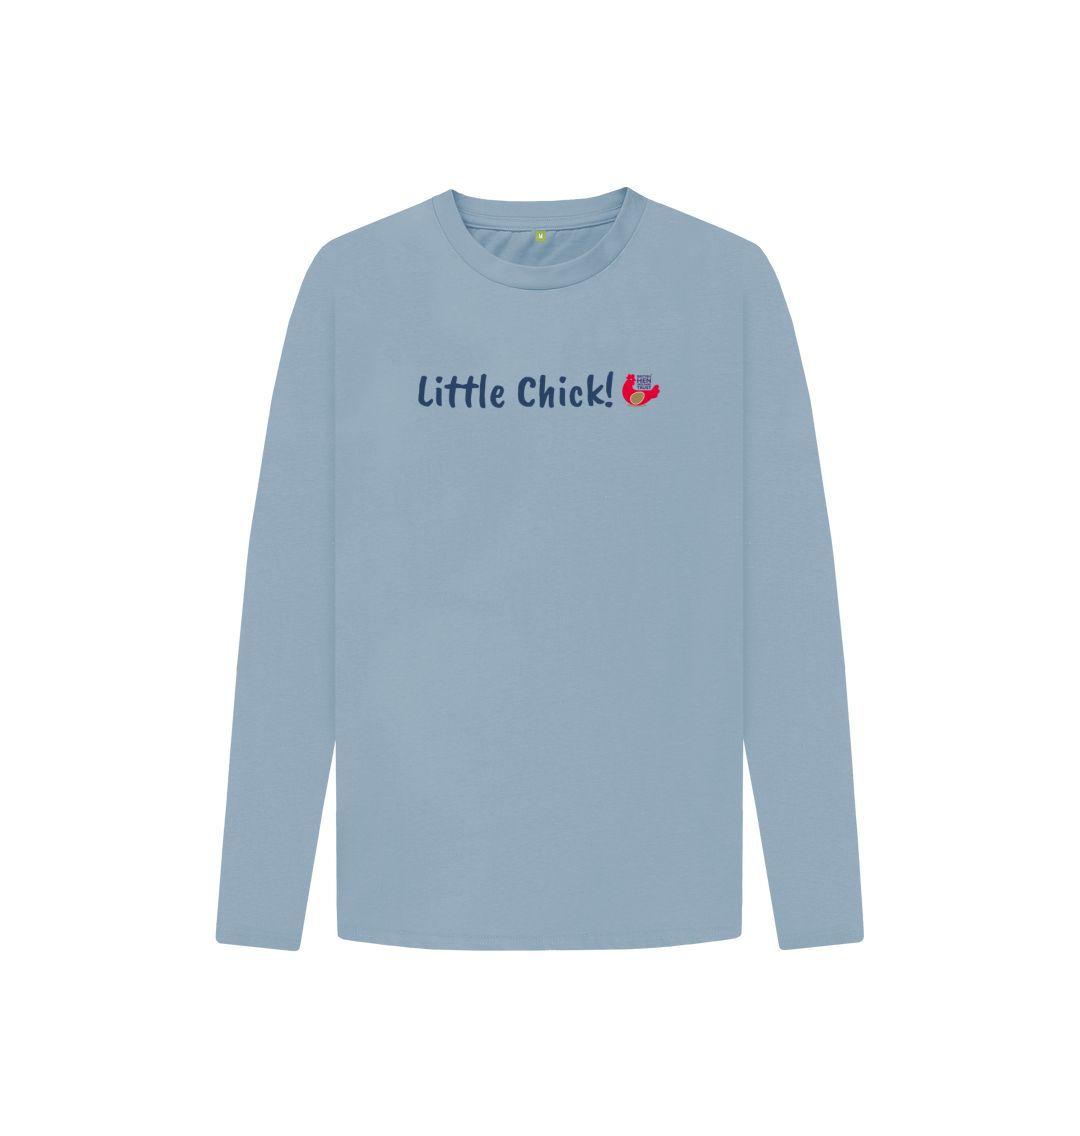 Stone Blue Little Chick! Kids Unisex Long Sleeve T-Shirt